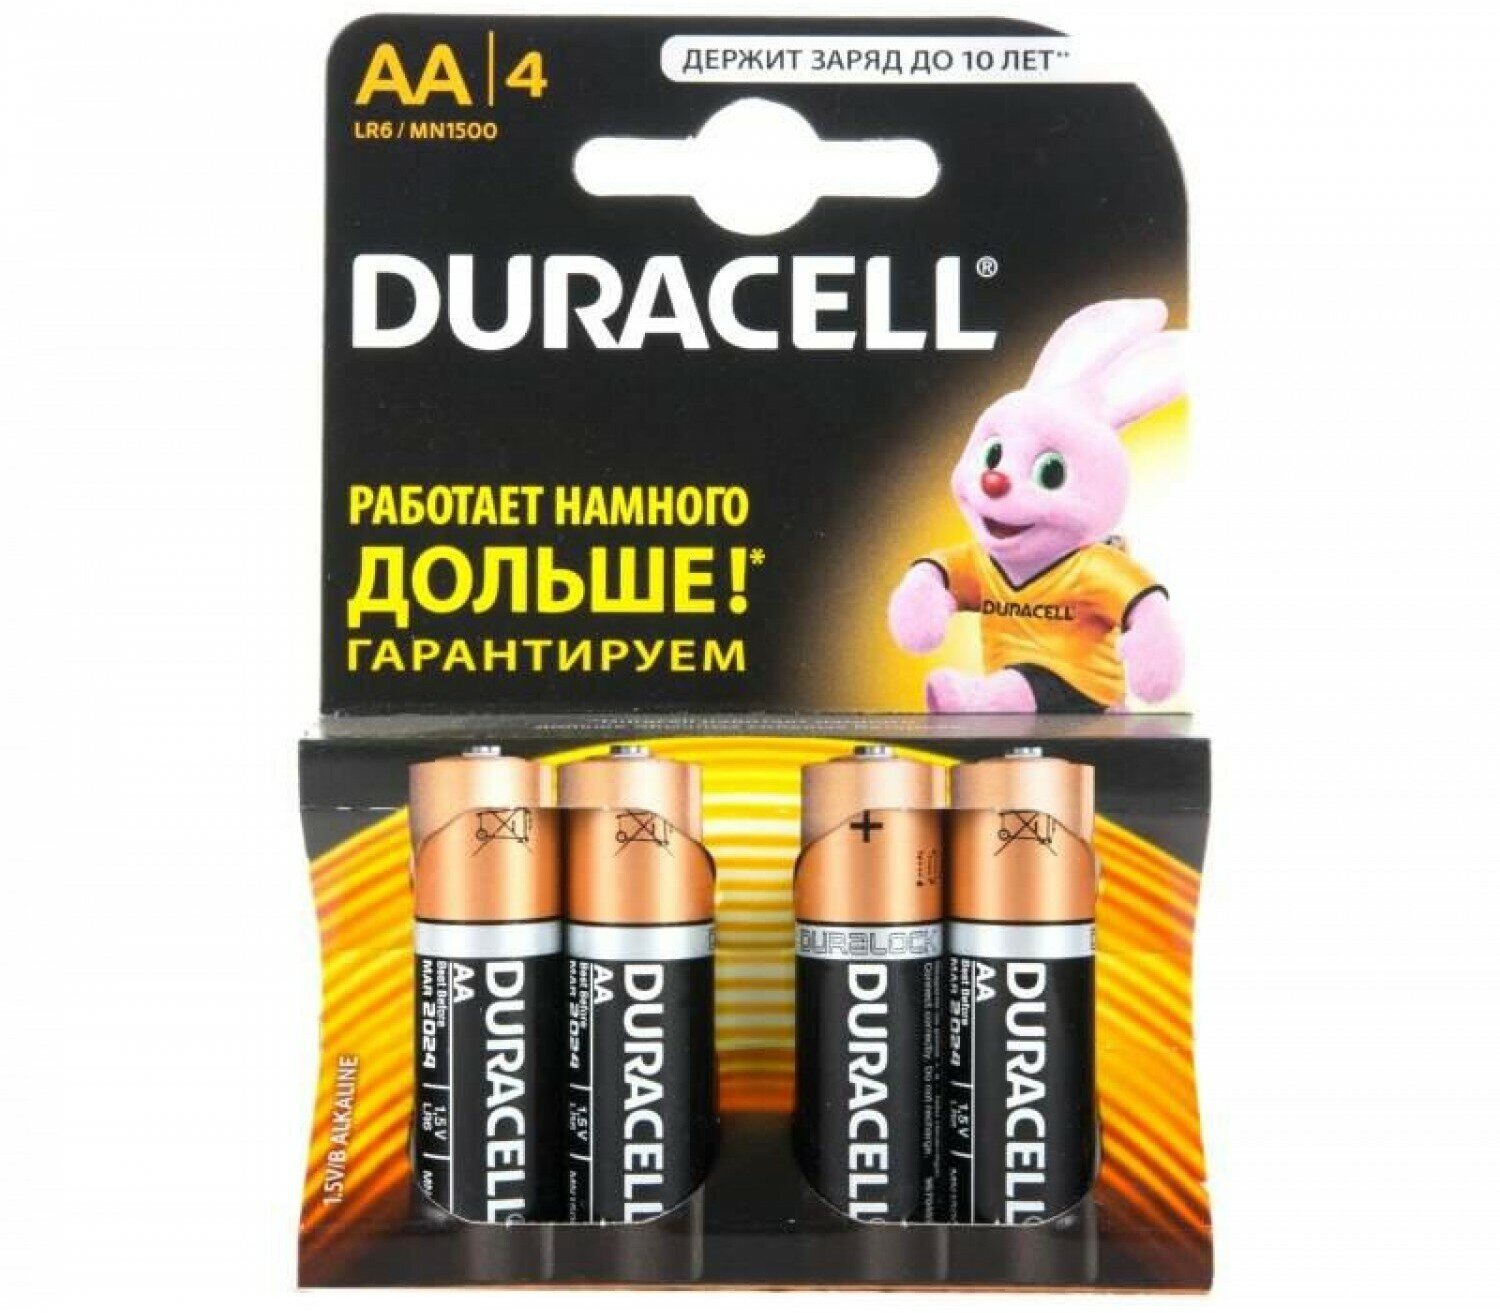 DURACELL Батарейка DURACELL LR06 LR06-4BL 4 шт